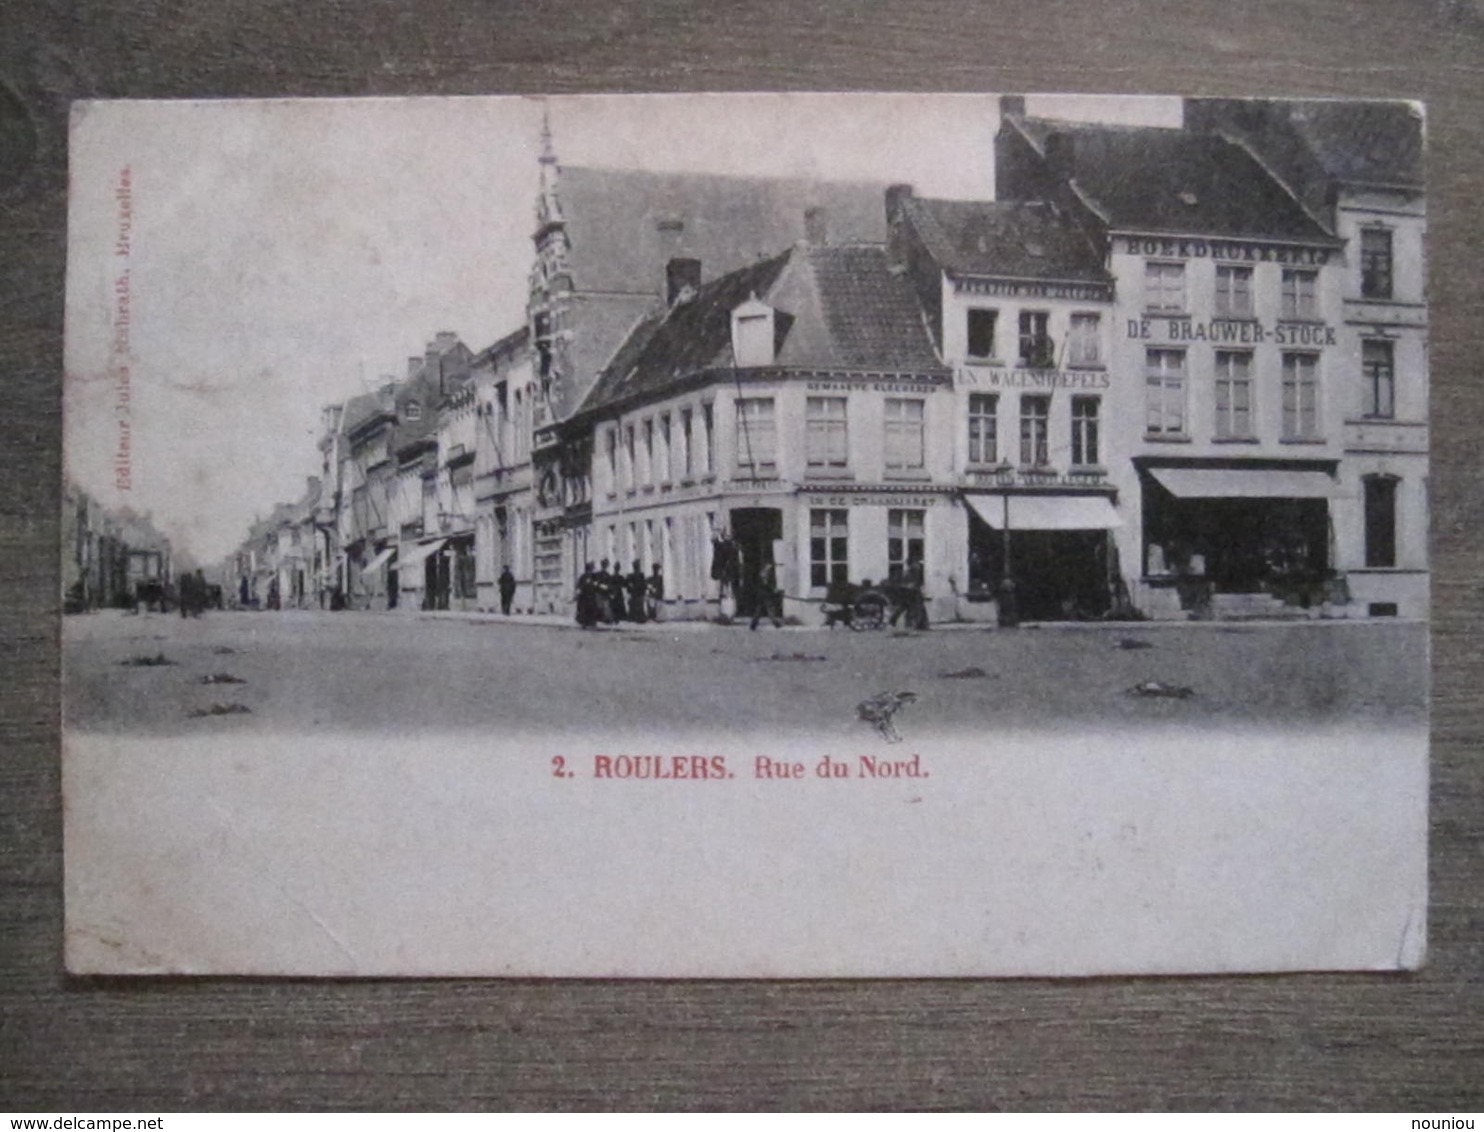 Cpa Roulers Roselaere - Rue Du Nord - Drukkerij Imprimerie De Brauwer-Stock - Edit. Nahrath Bruxelles - 1901 - Roeselare